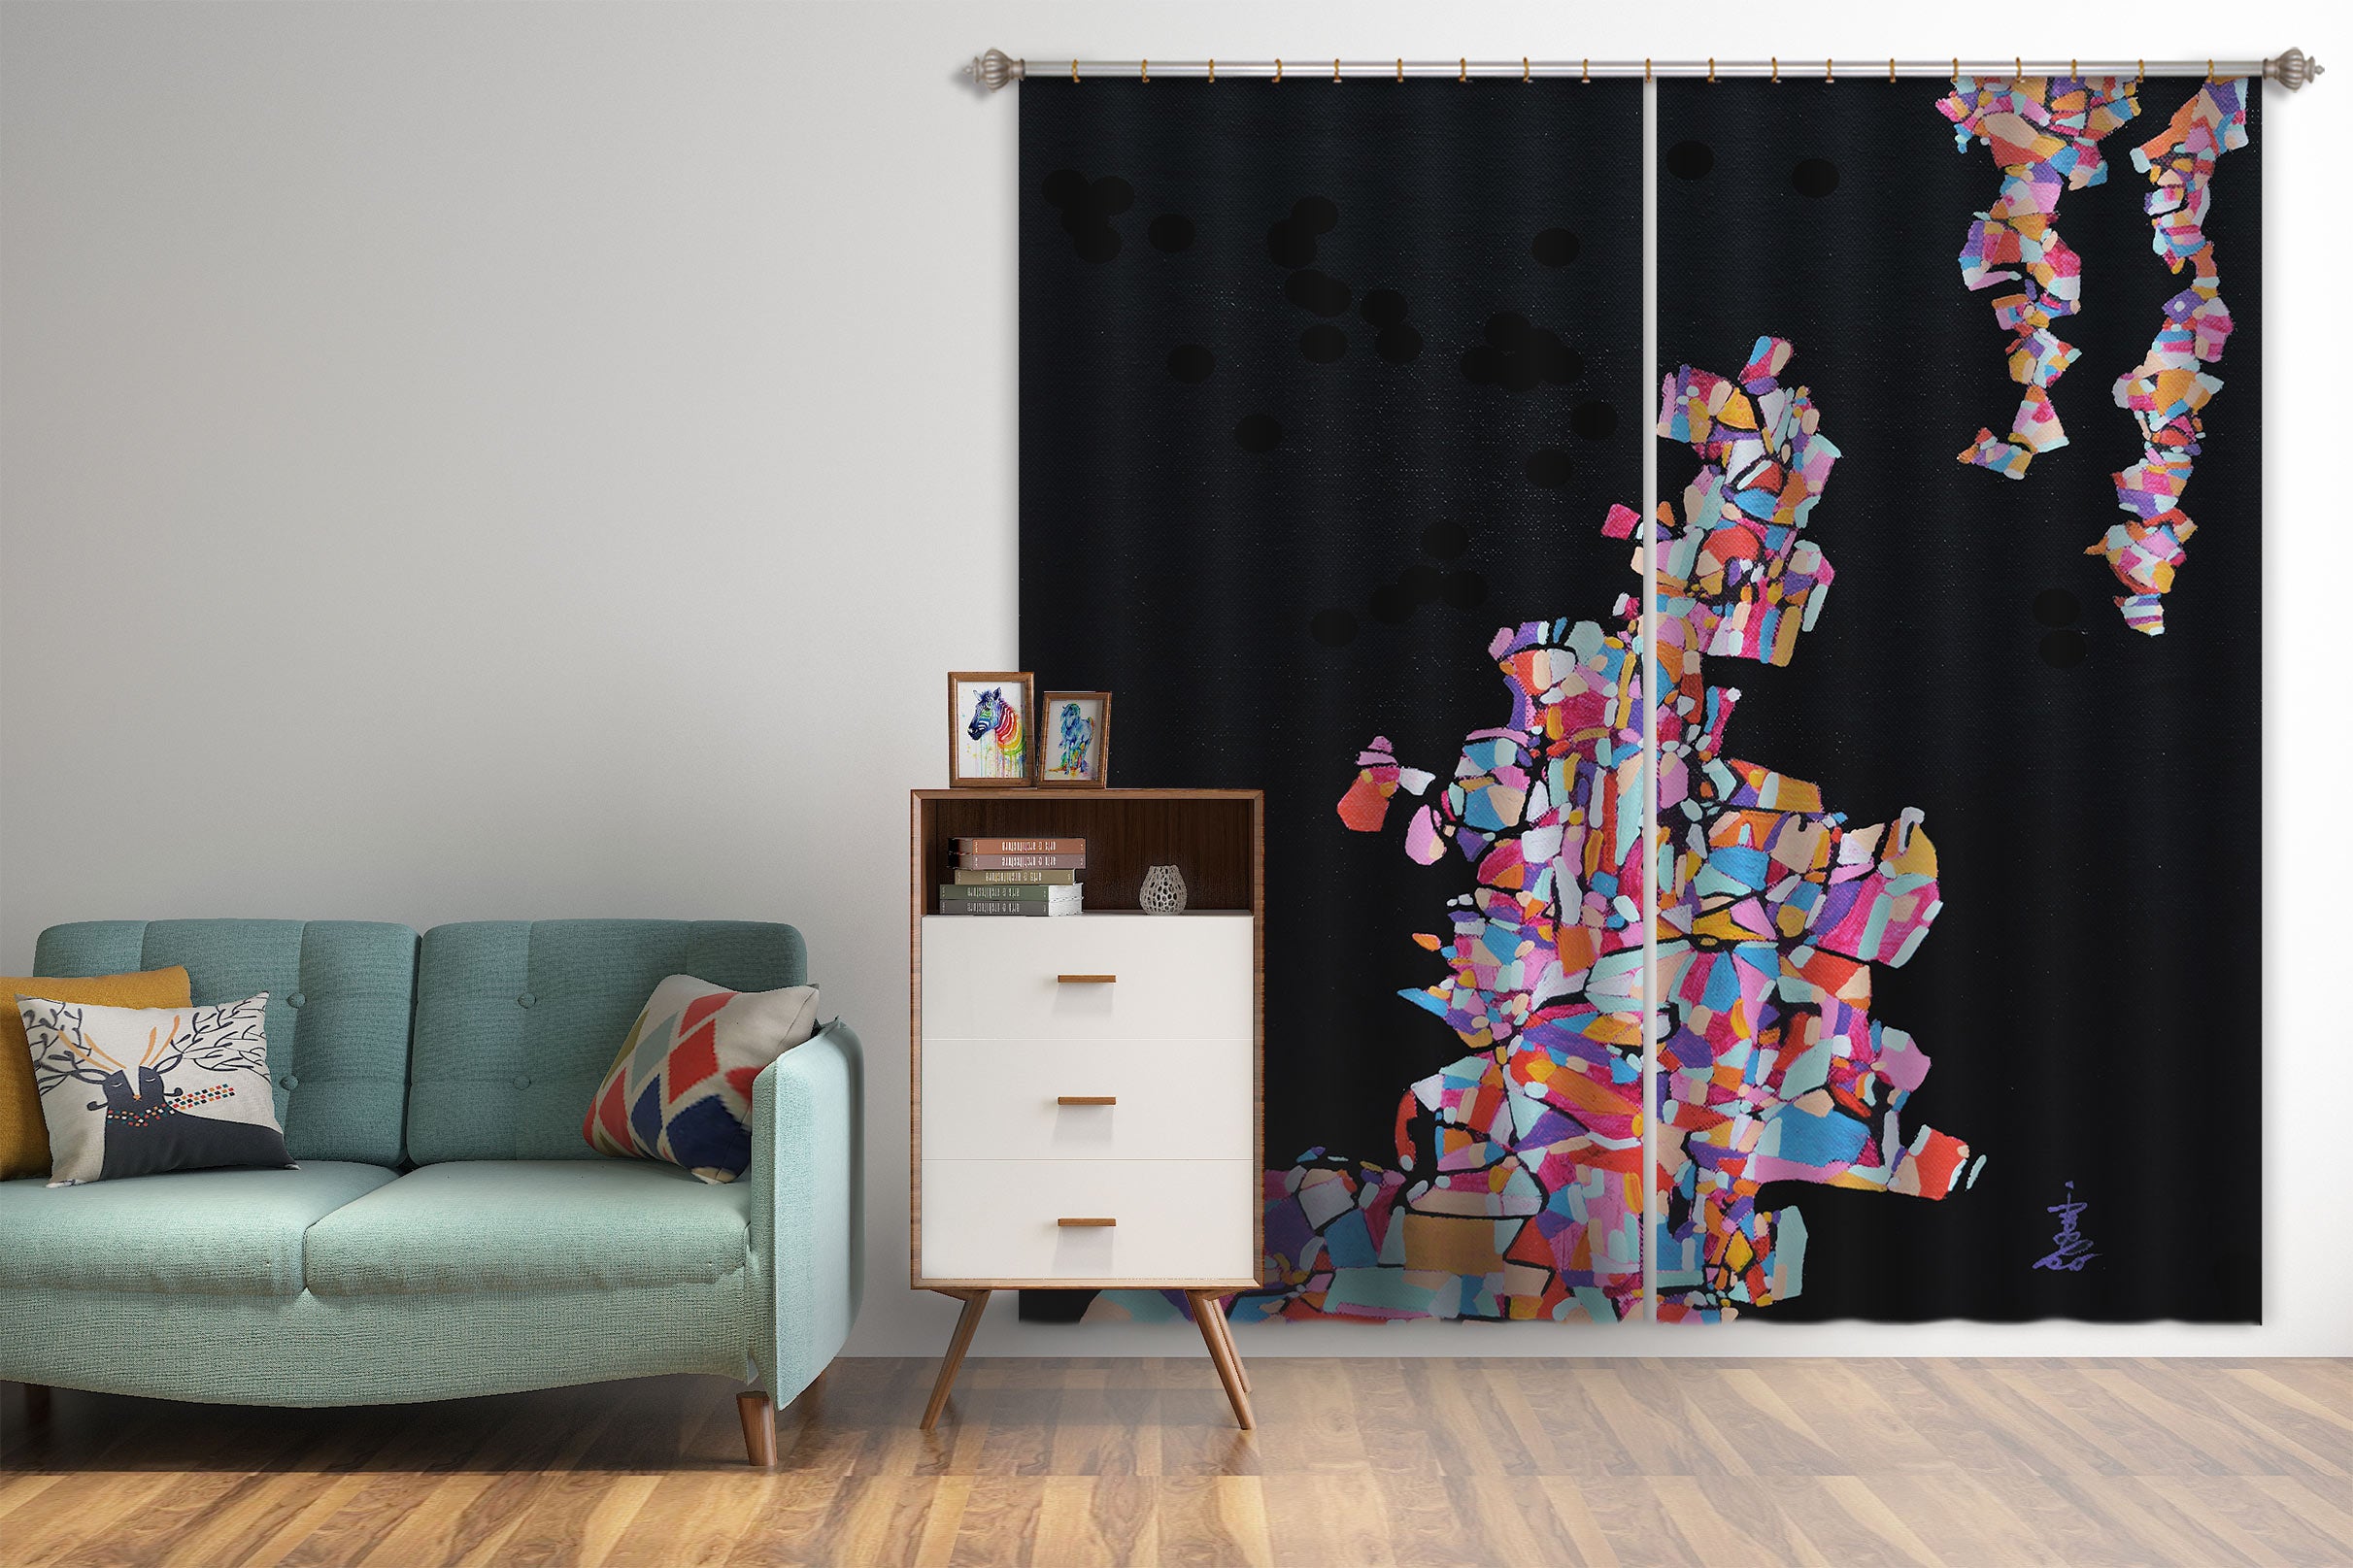 3D Color Graphics Black 2359 Misako Chida Curtain Curtains Drapes